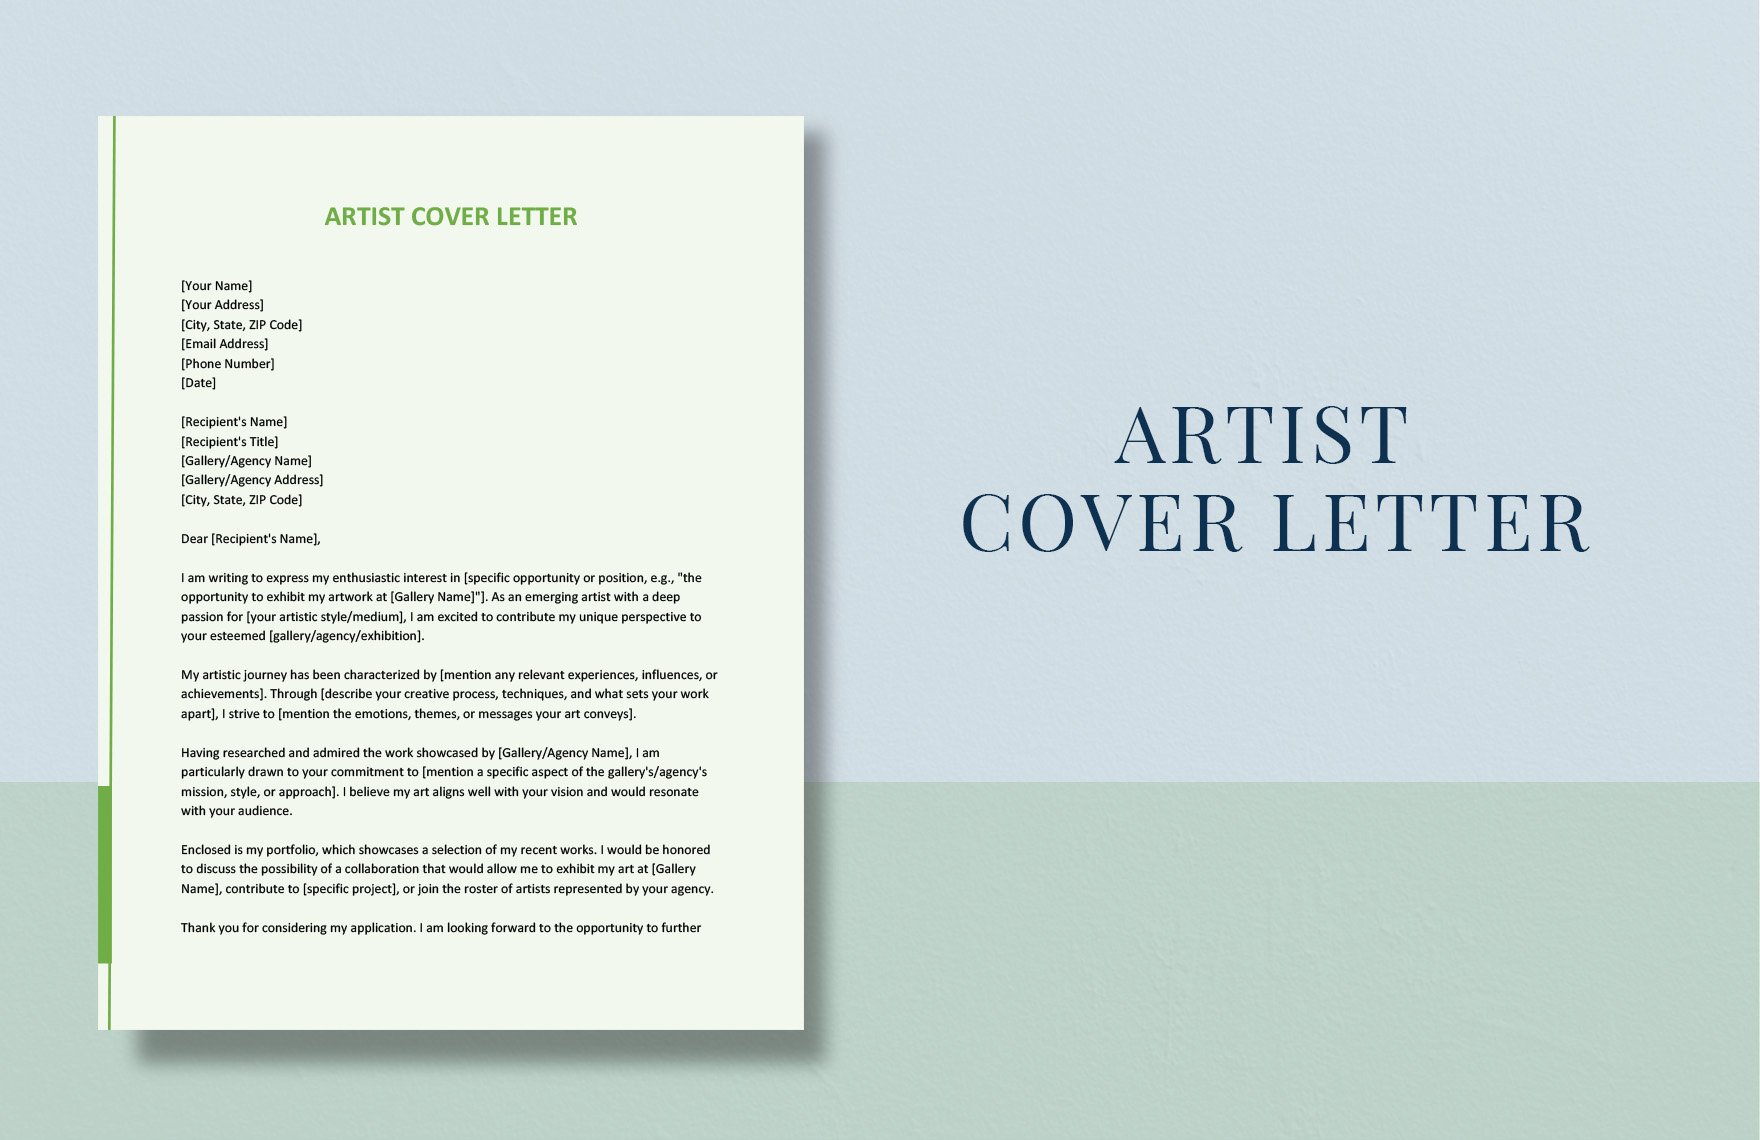 Artist Cover Letter in Word, Google Docs